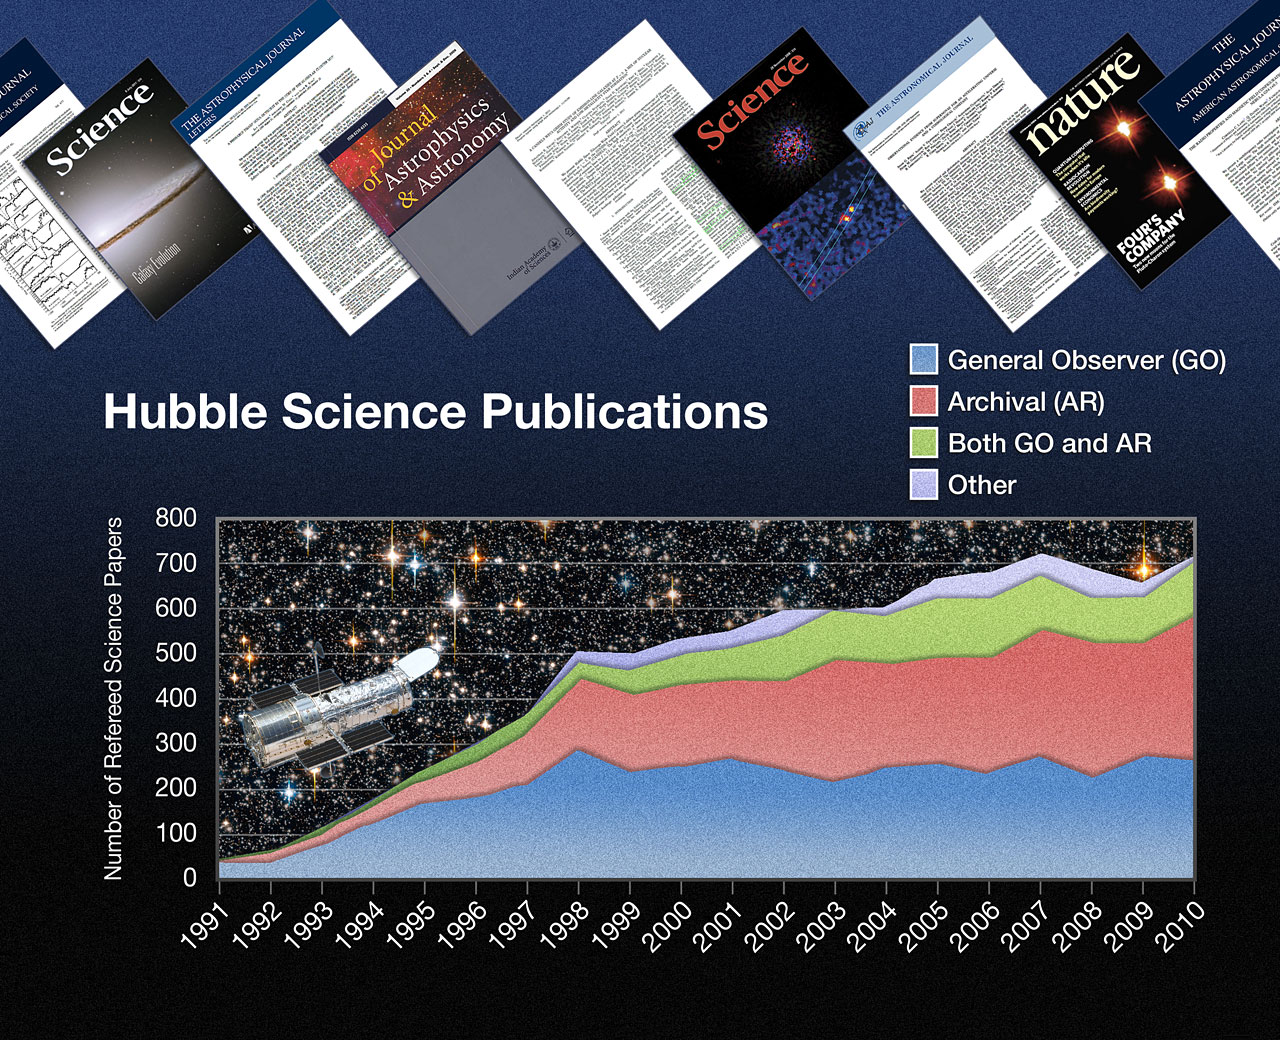 Hubble publication statistics